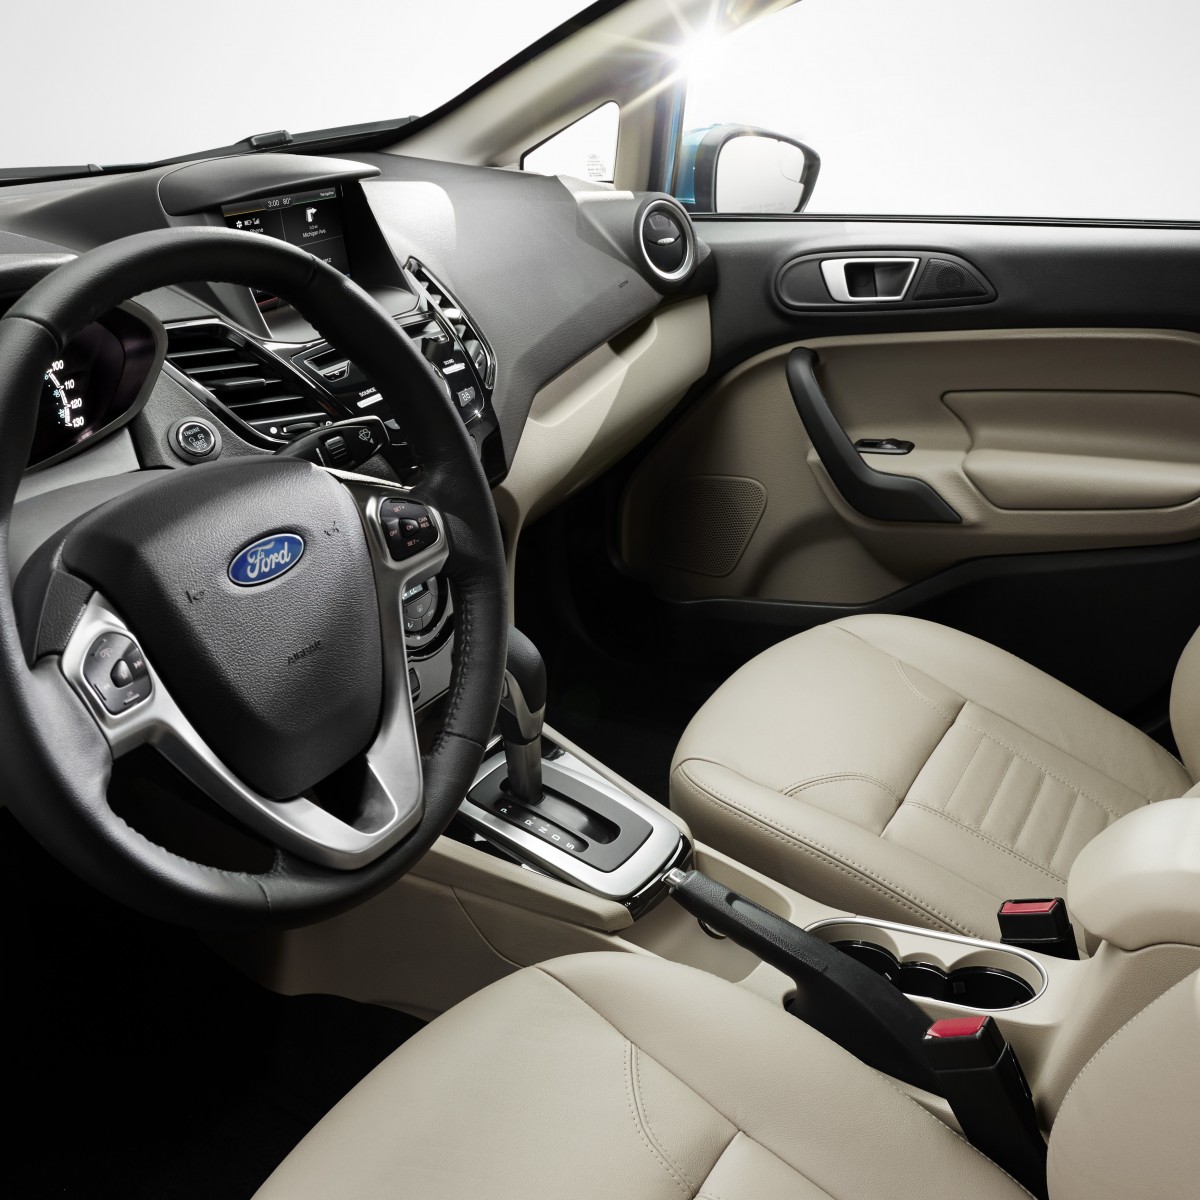 Ford Fiesta 2014 1.0 EcoBoost interiores